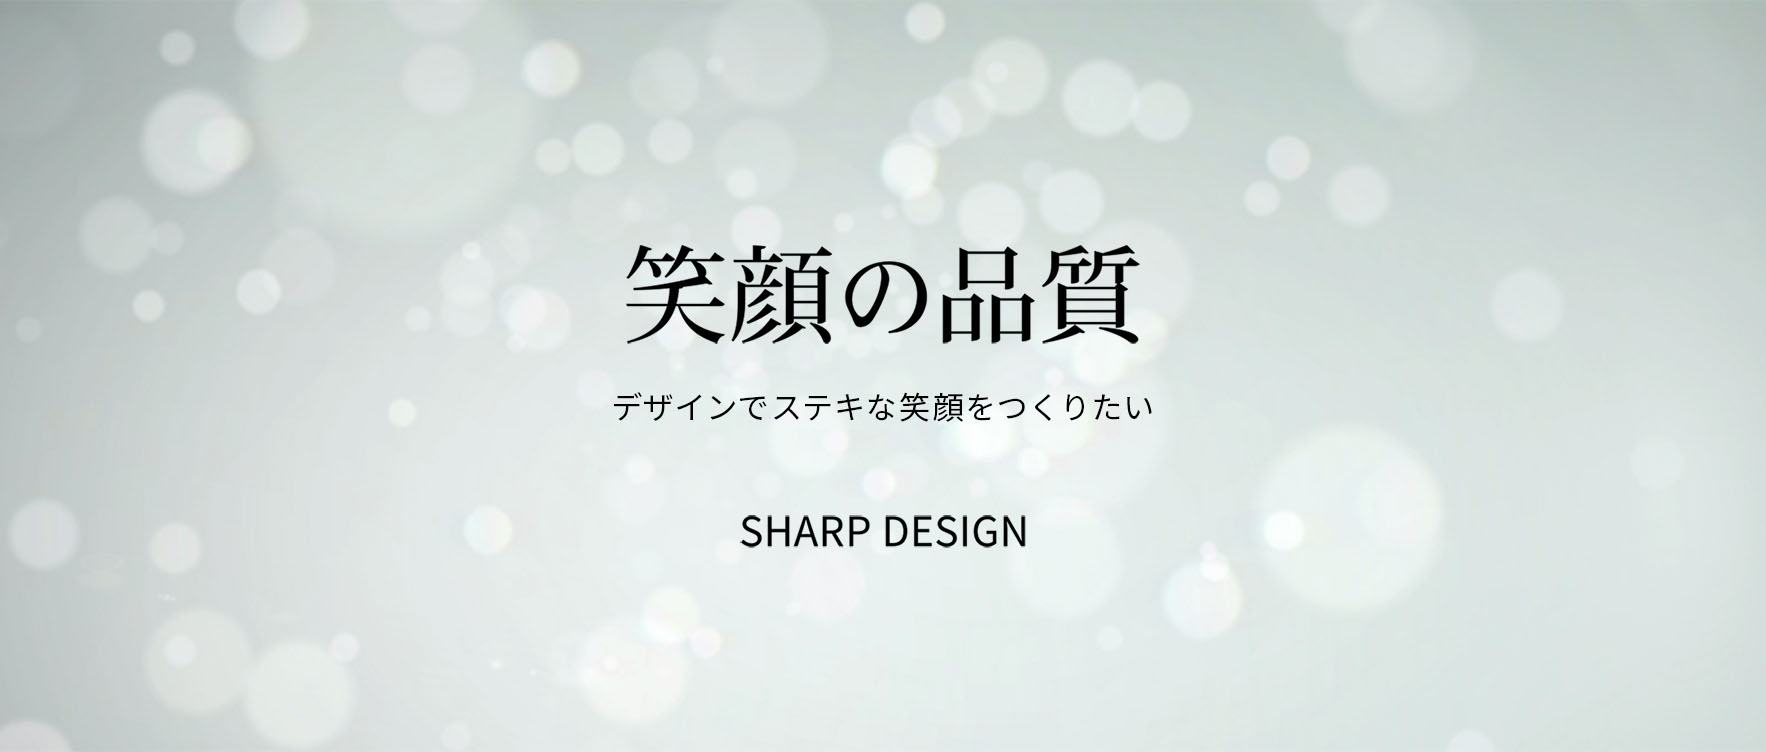 SHARP DESIGN 